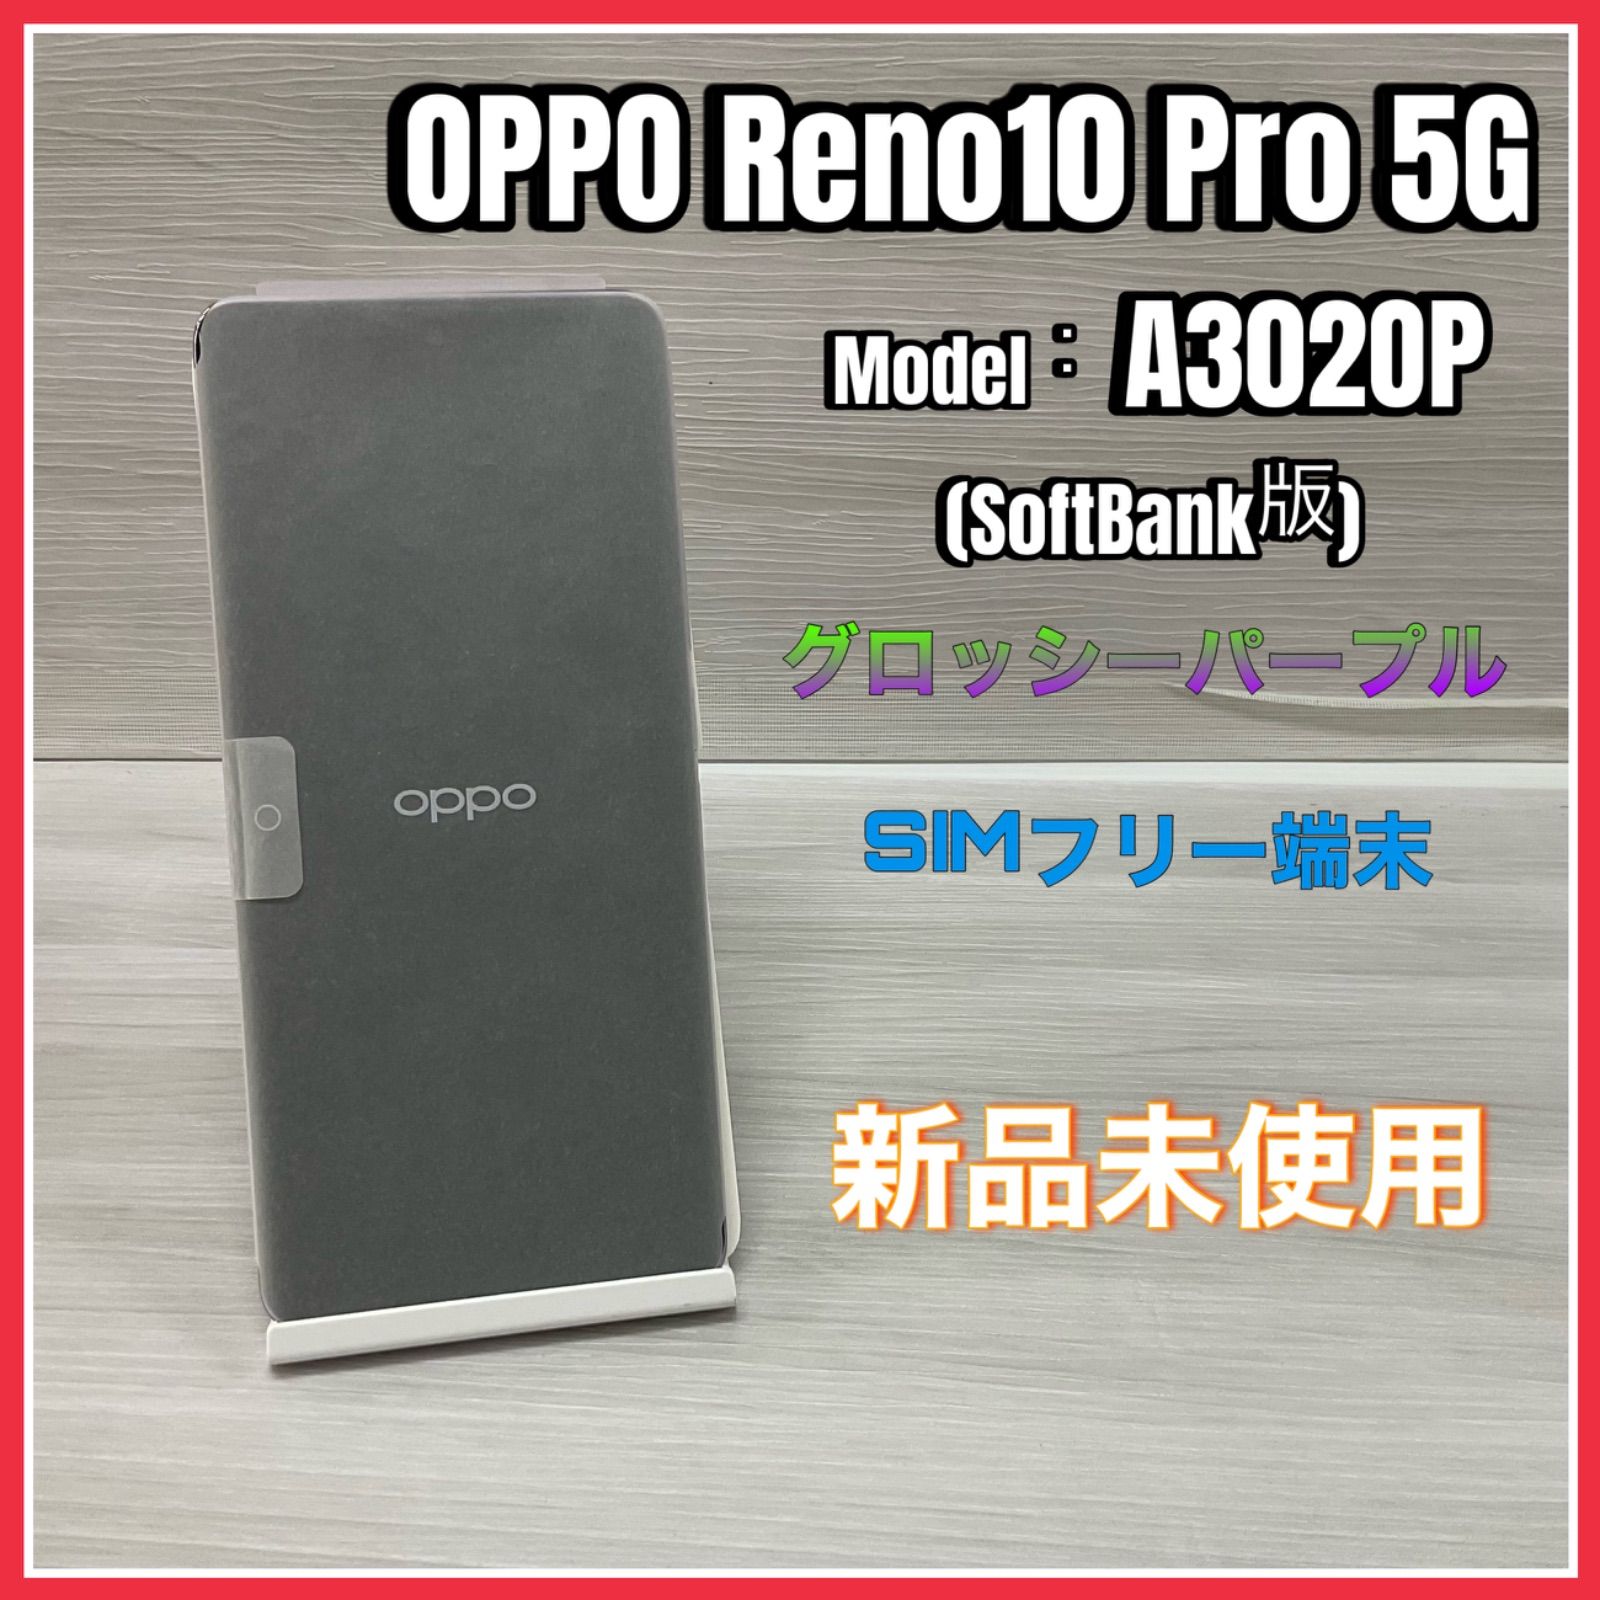 OPPO Reno10 Pro 5G Softbank版 グロッシーパープル | jayceebrands.com